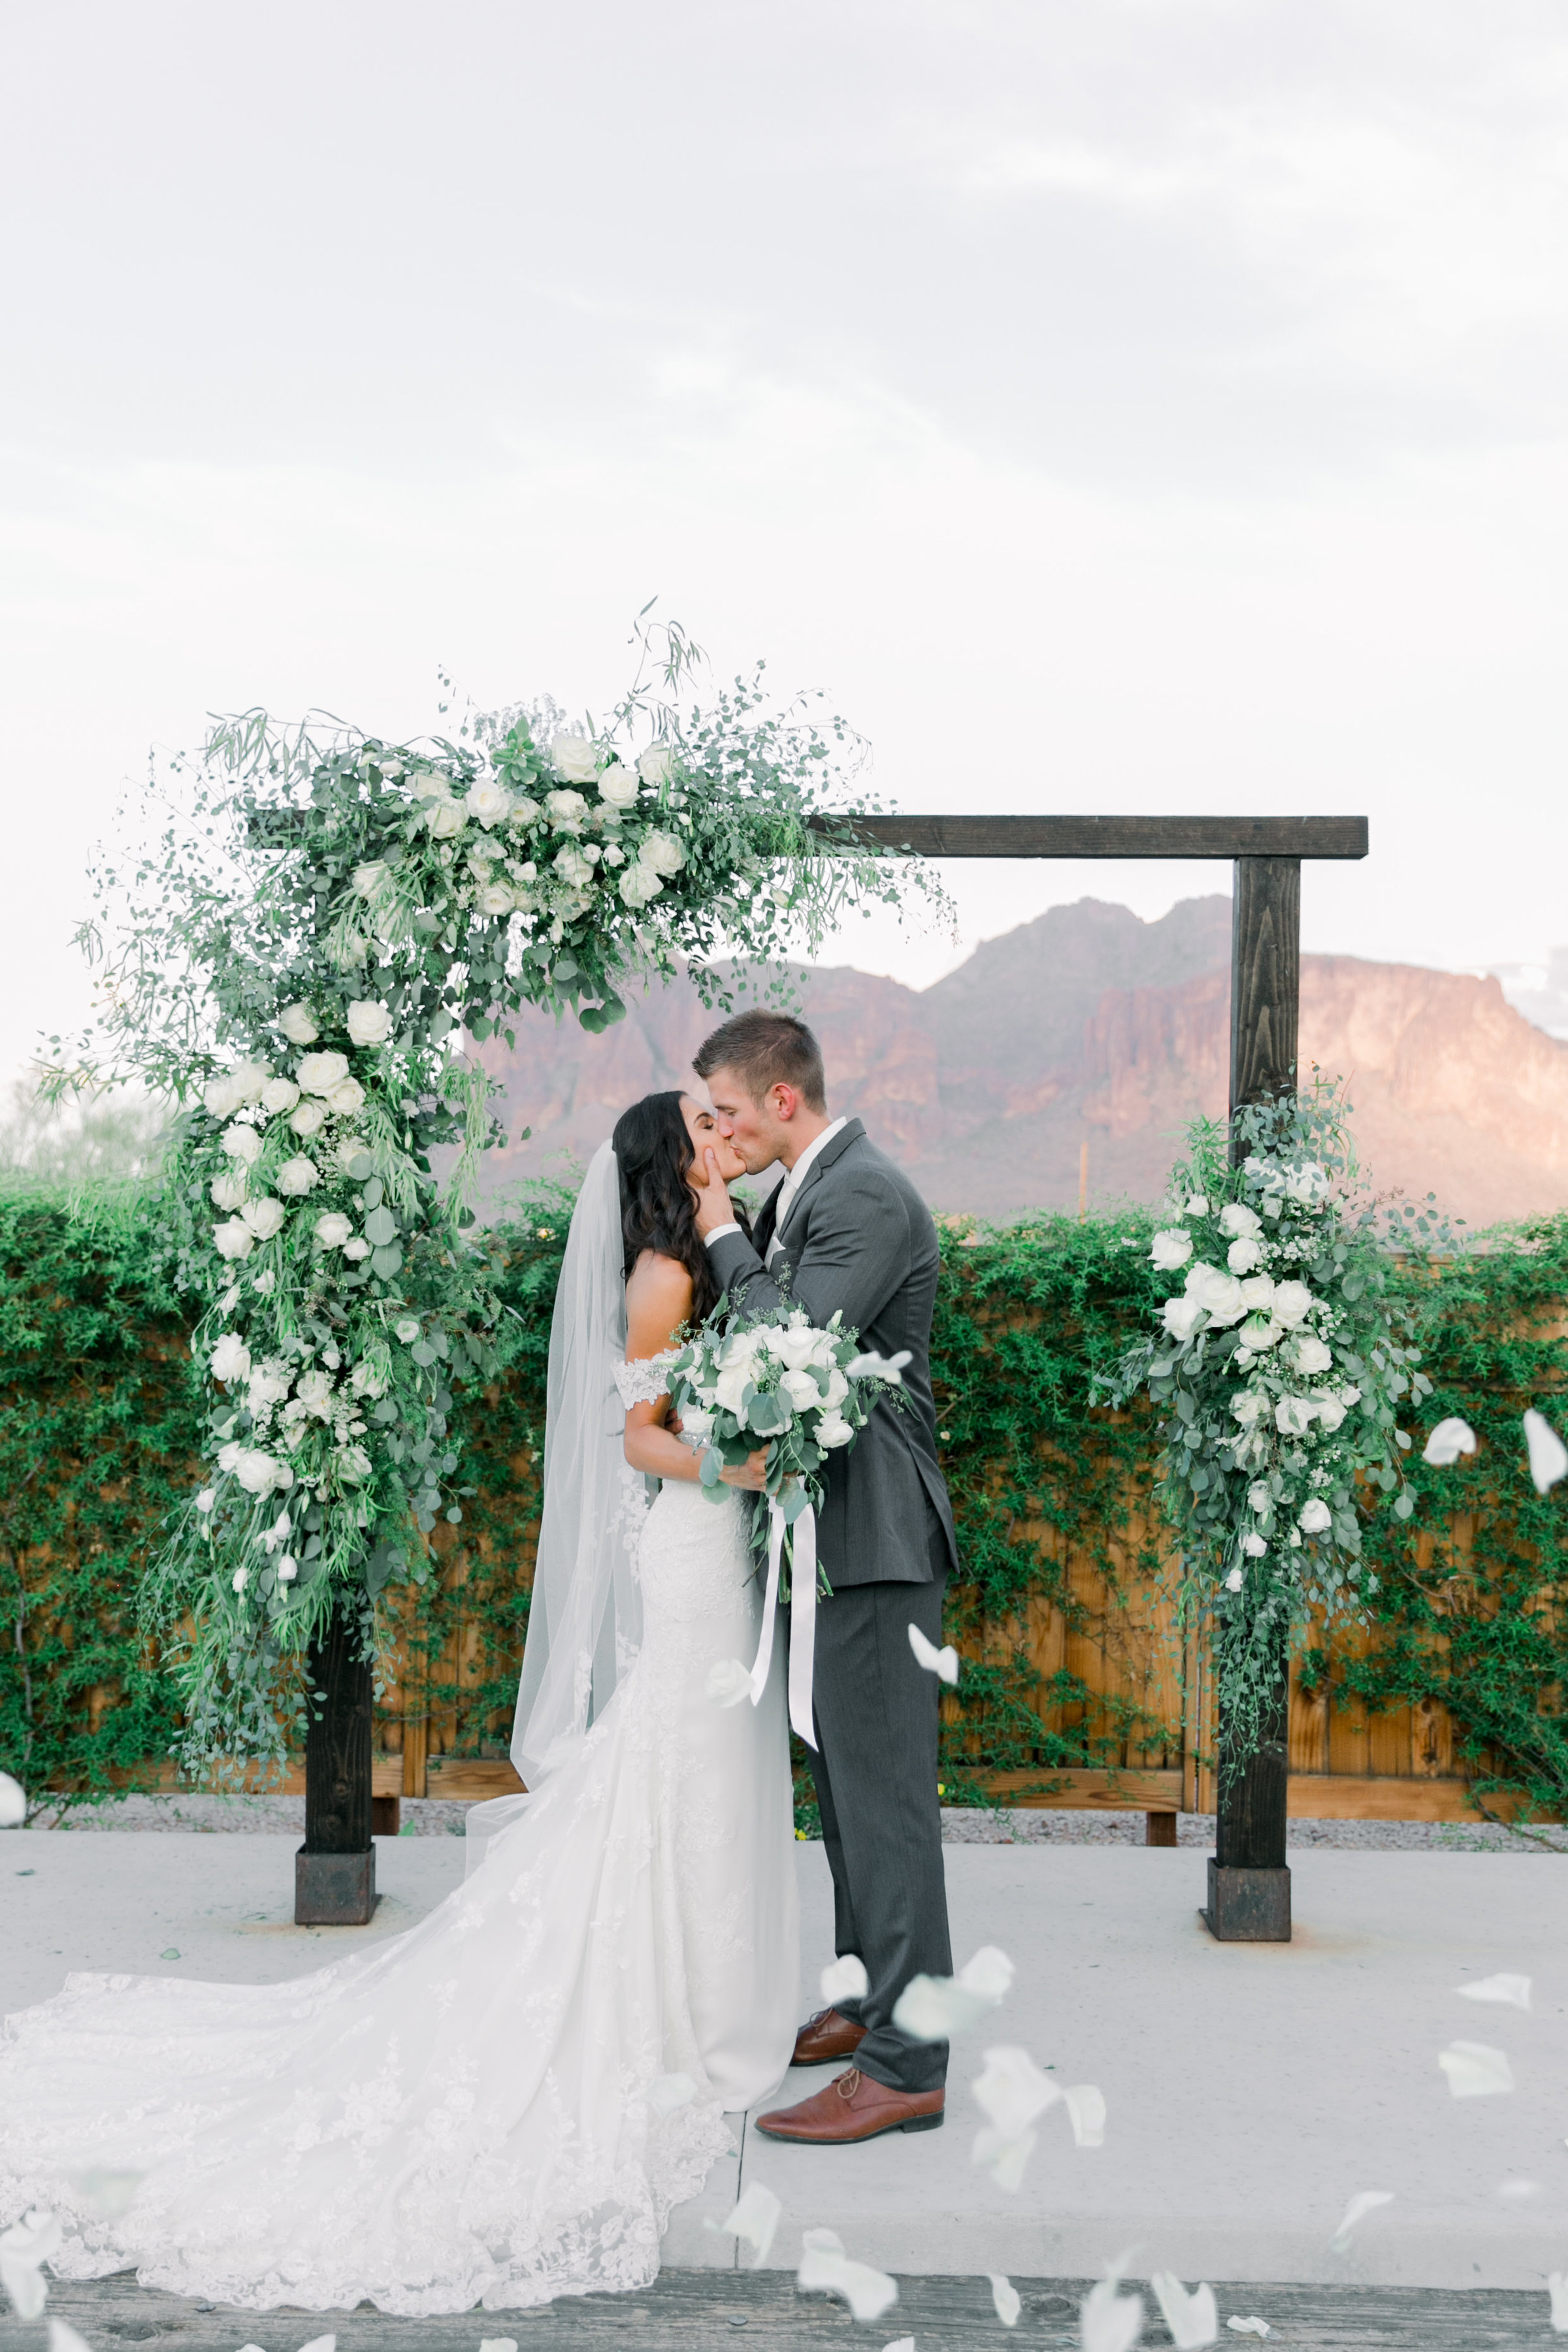 Karlie Colleen Photography - The Paseo Arizona Desert Wedding - Jackie & Ryan-170